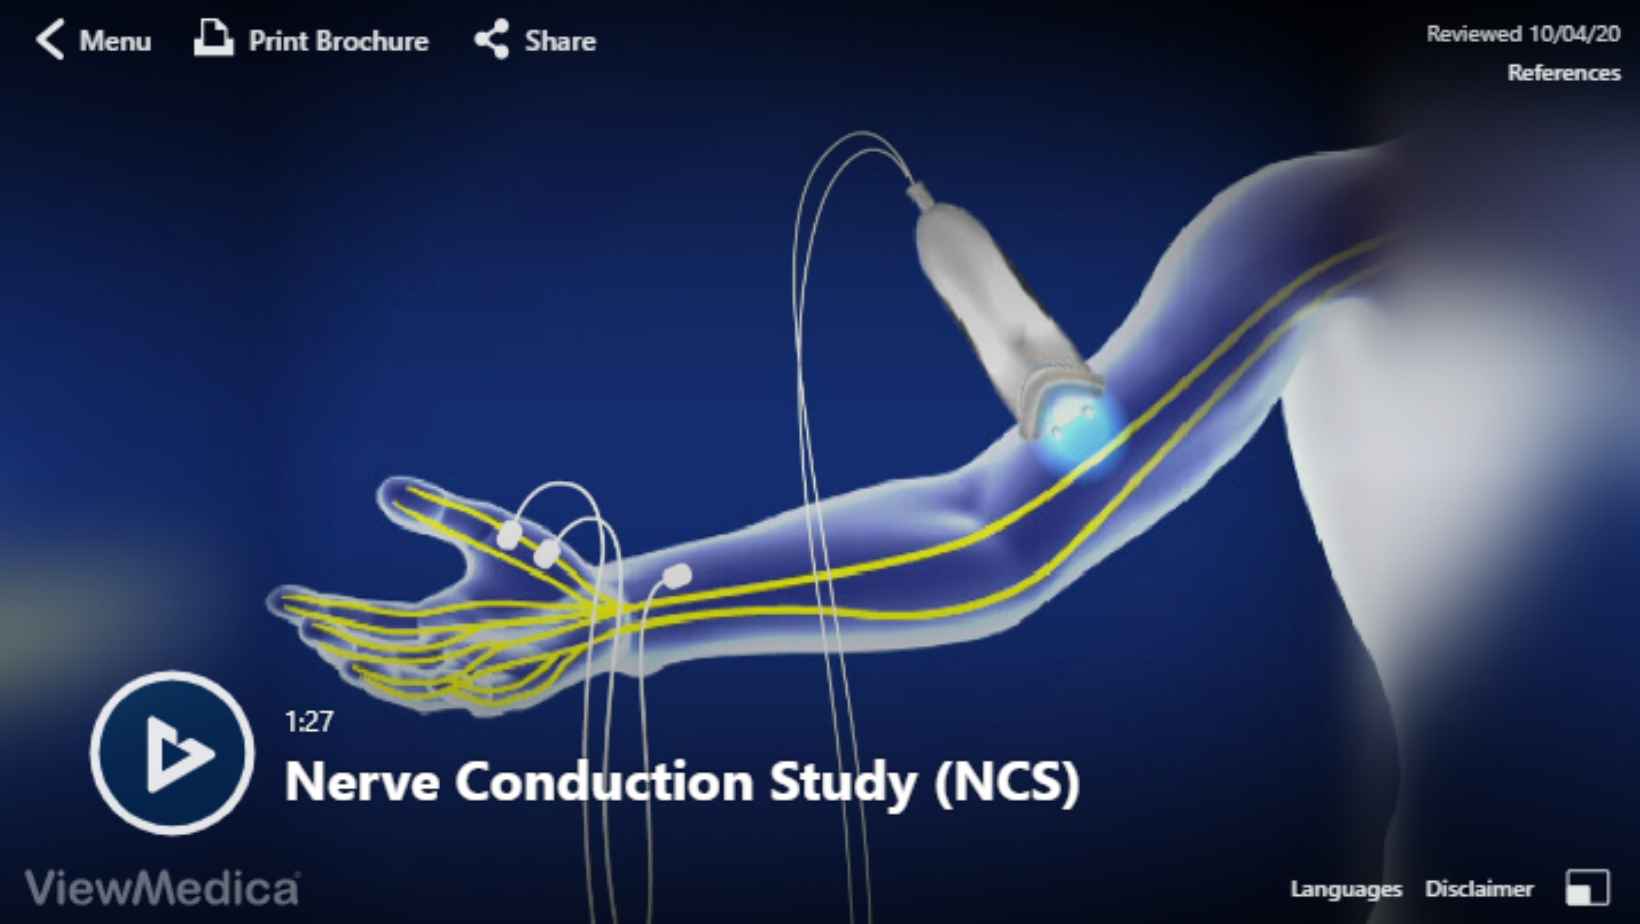 Video: Nerve Conduction Study (NCS)